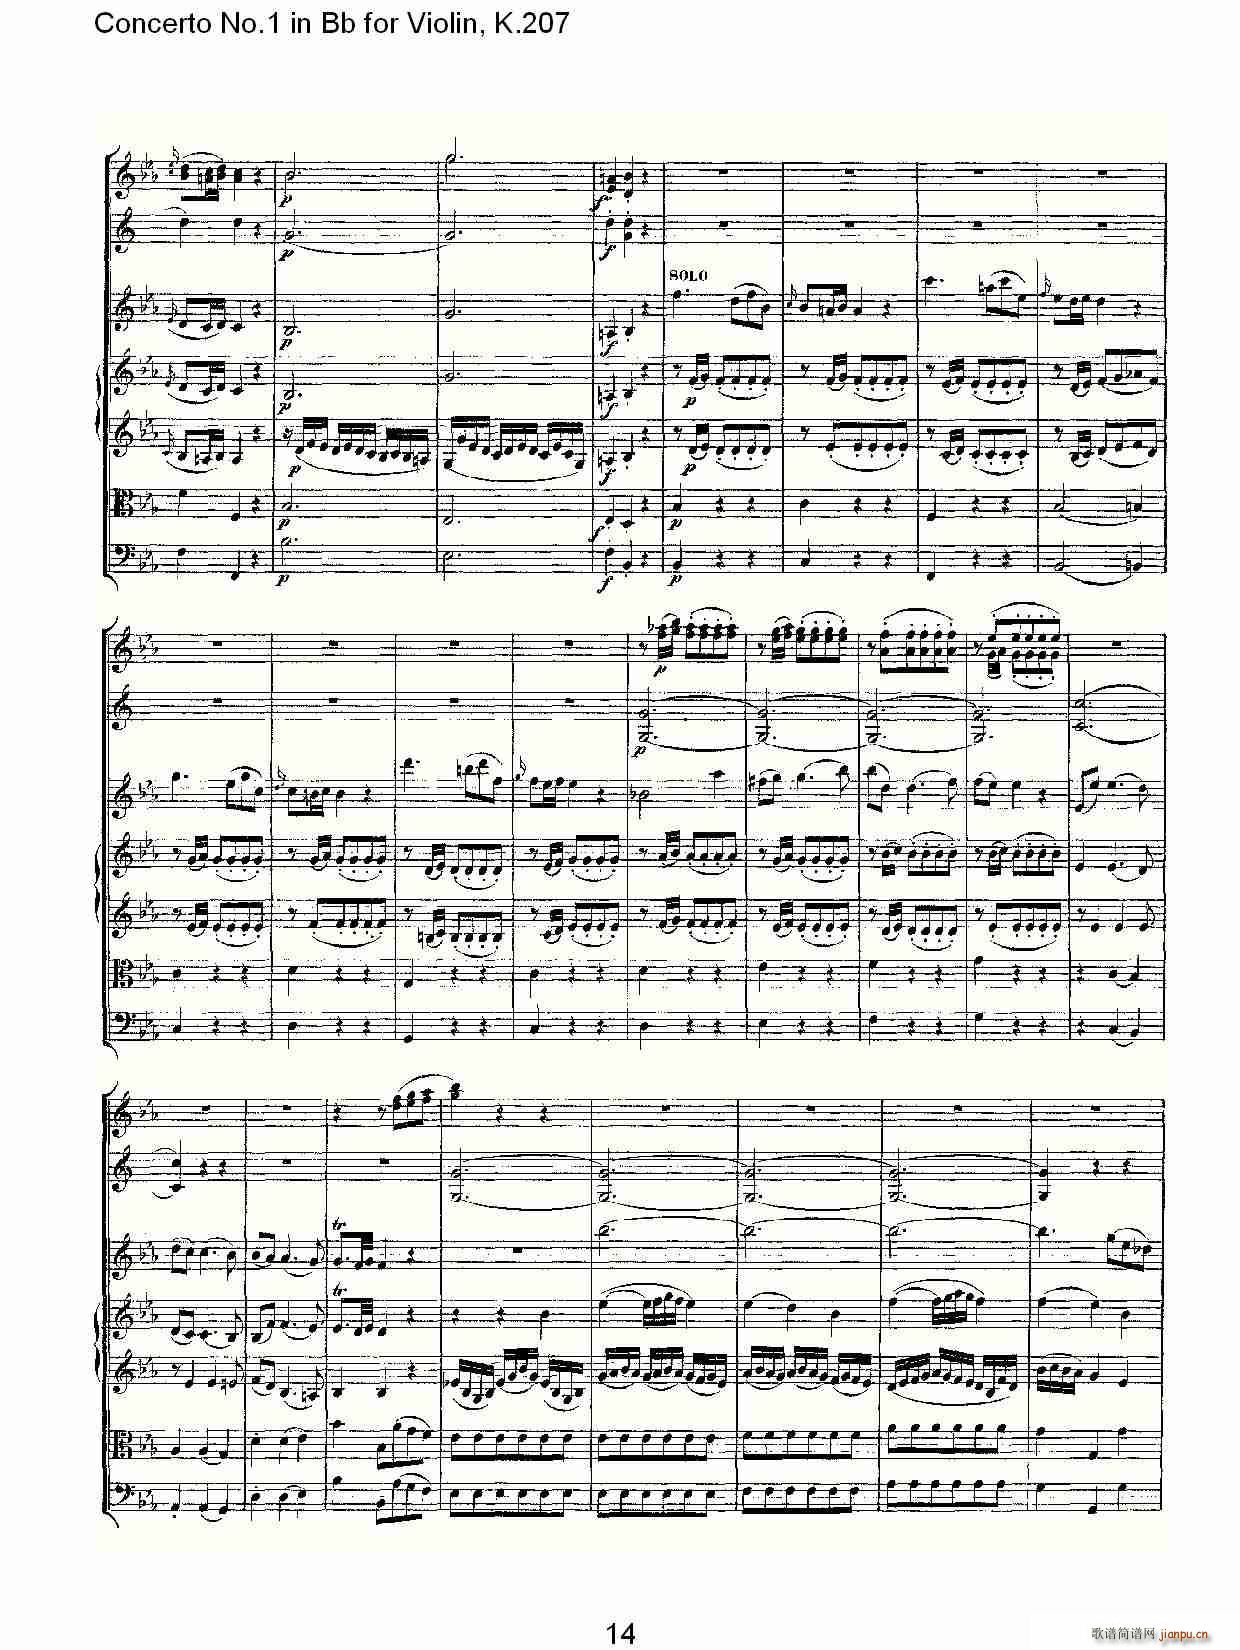 Concerto No.1 in Bb for Violin, K.207(С)14